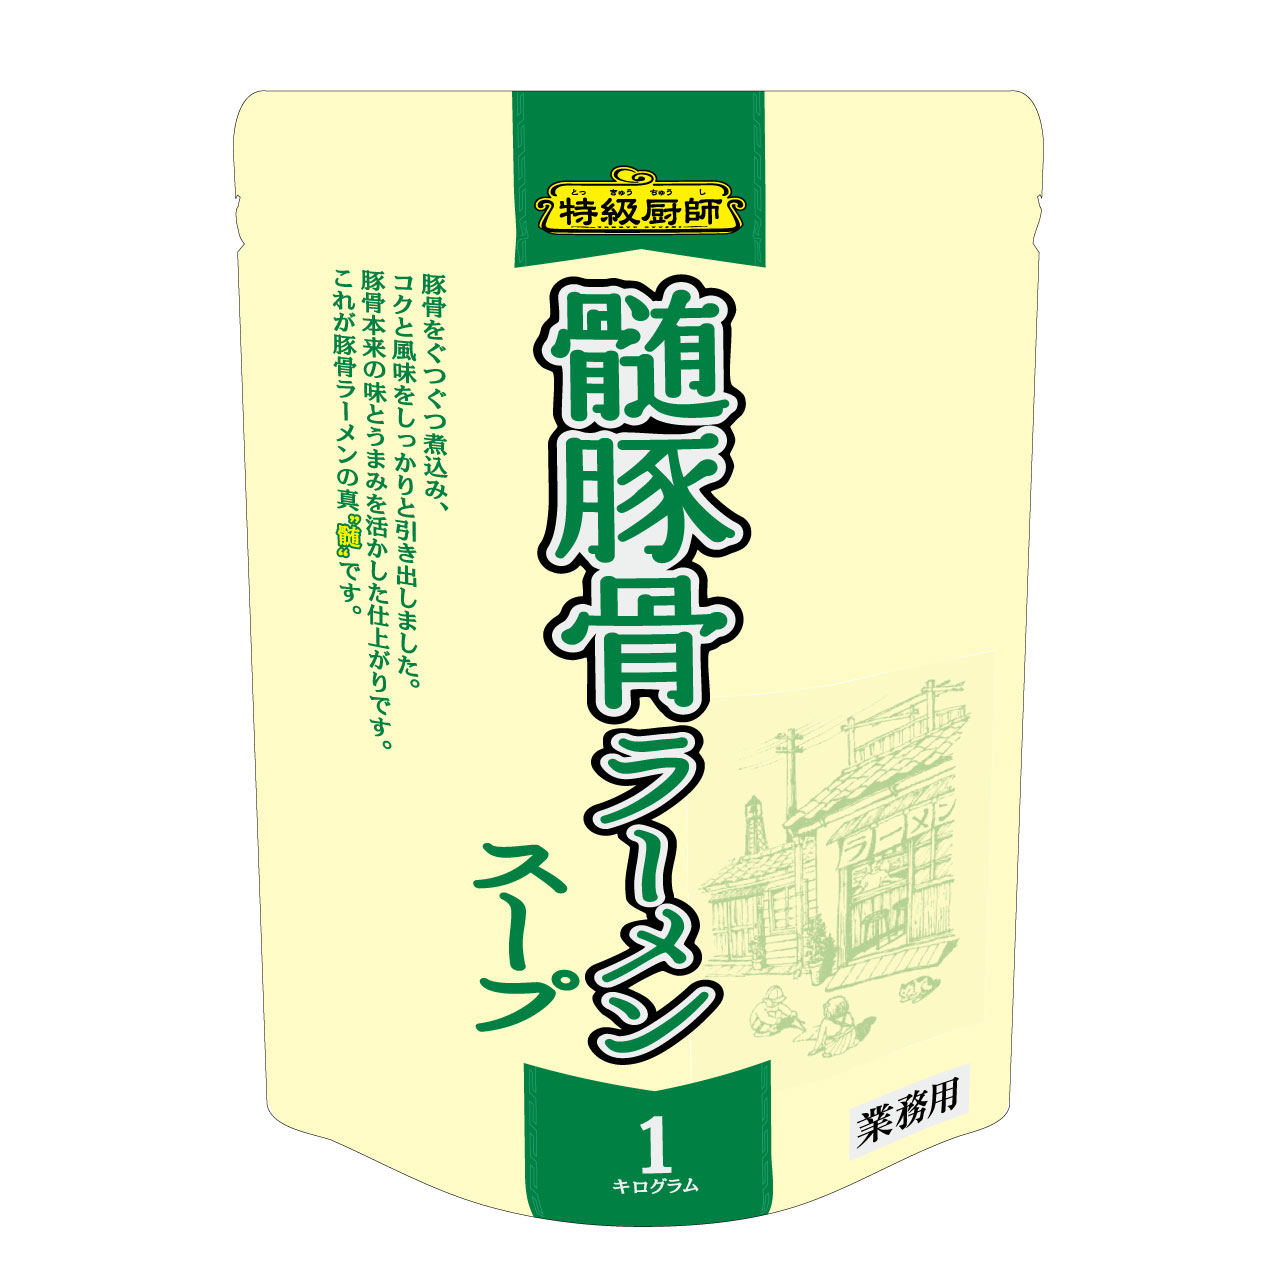 【HP用】0132155-特級厨師-髄豚骨ラーメンスープ